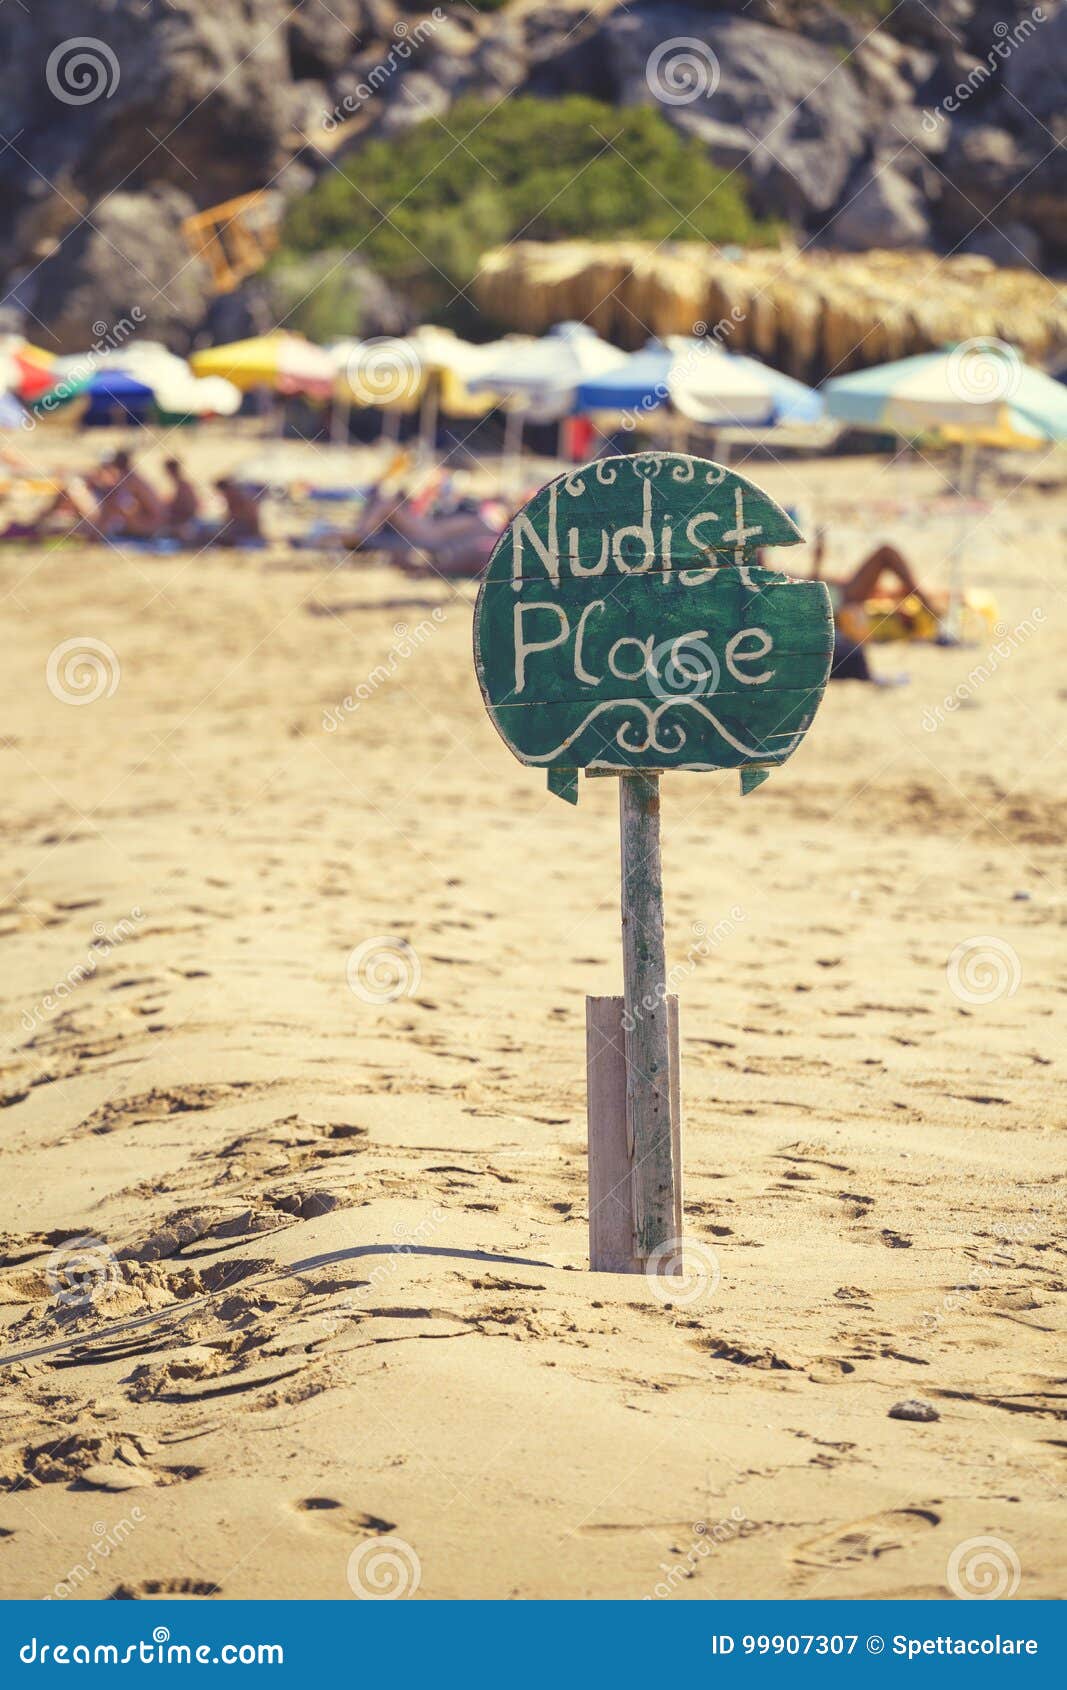 voyeur in nude beach